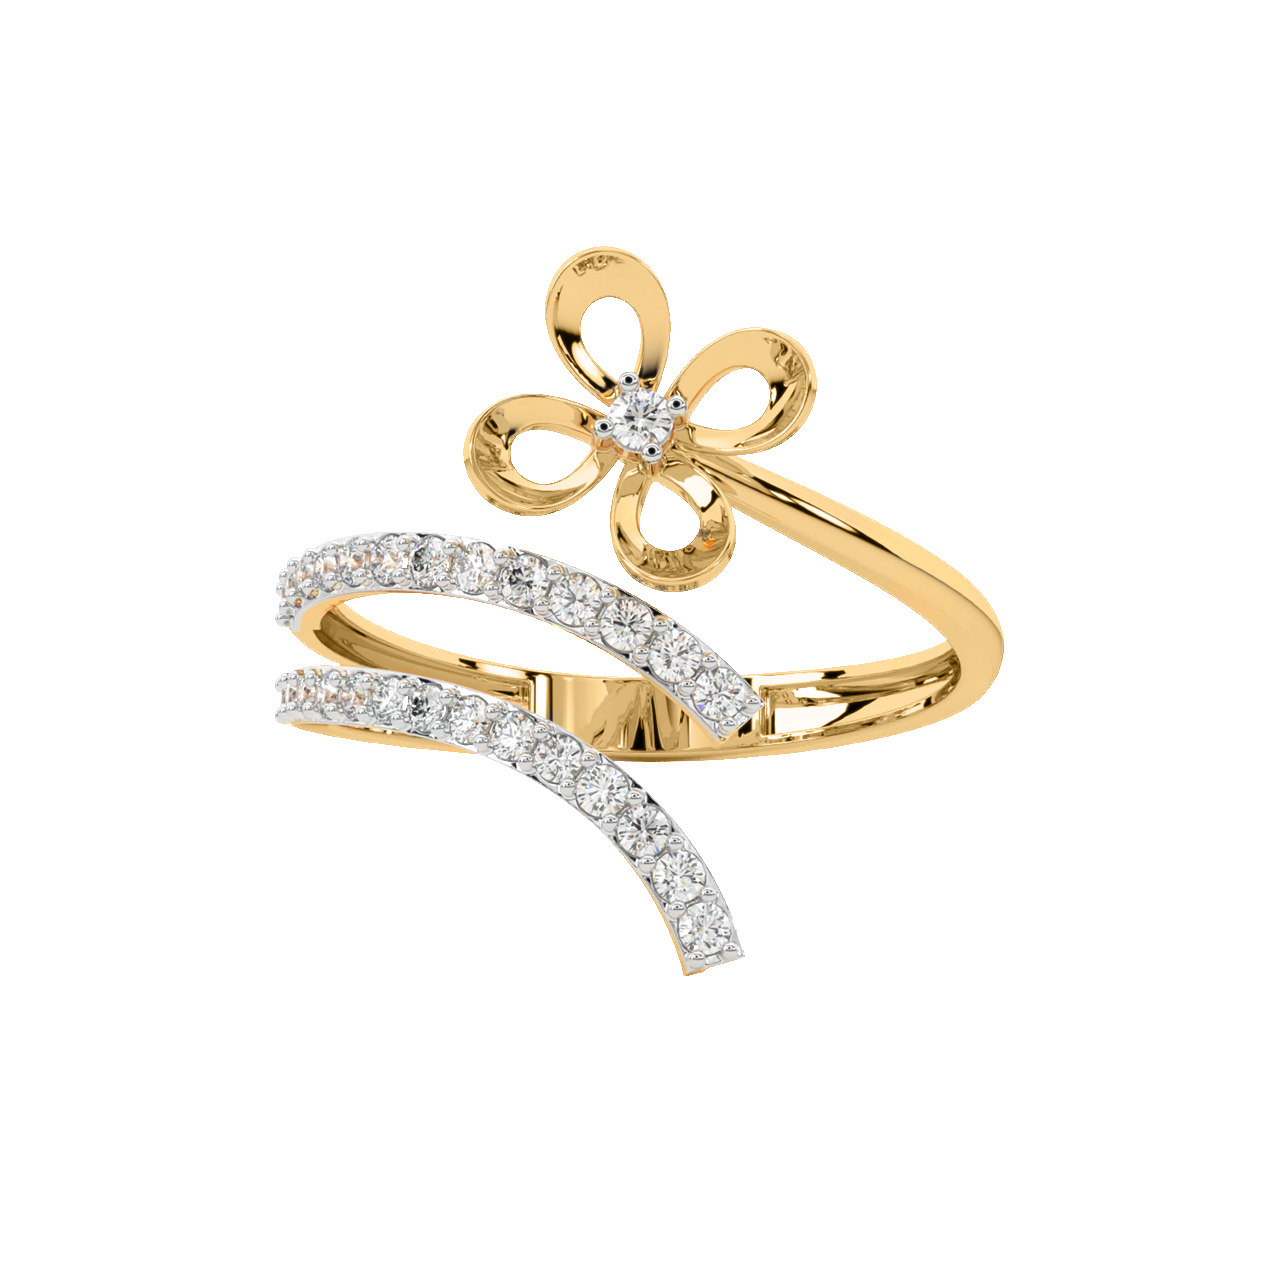 Charu Jewels Fancy Design Diamond Ring at Rs 15600 in Surat | ID: 9209159348